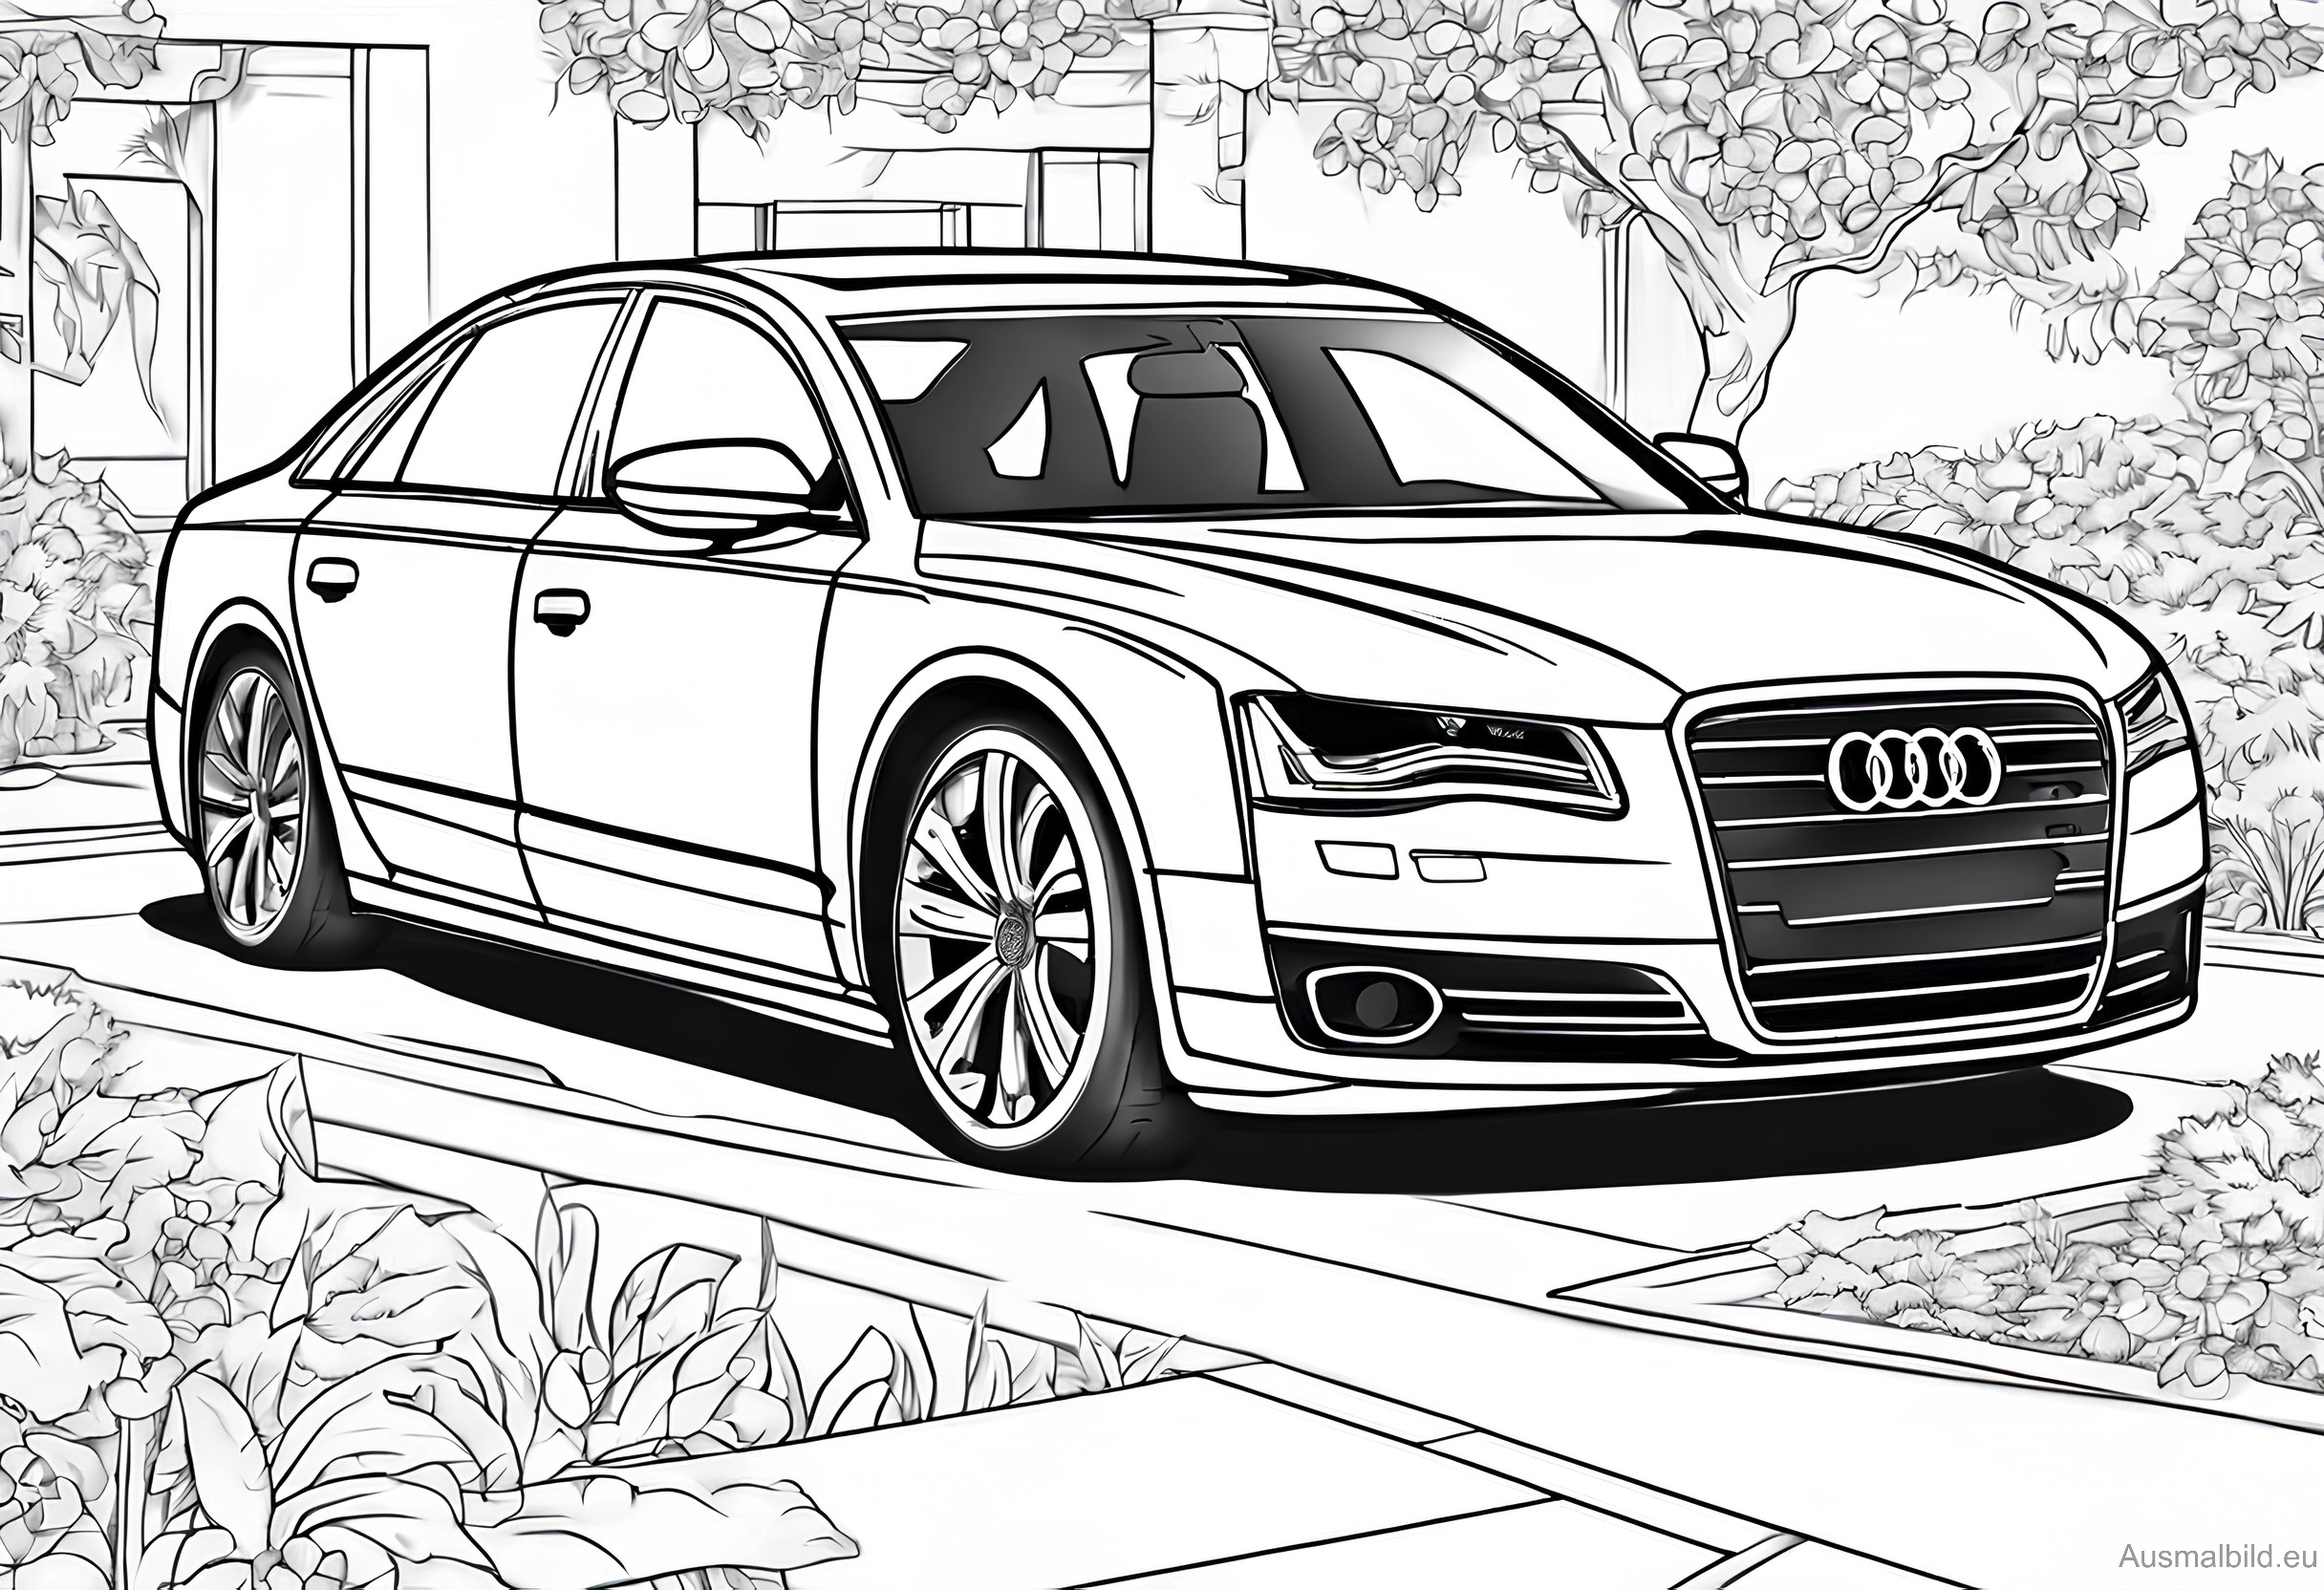 Ausmalbild: Audi A8